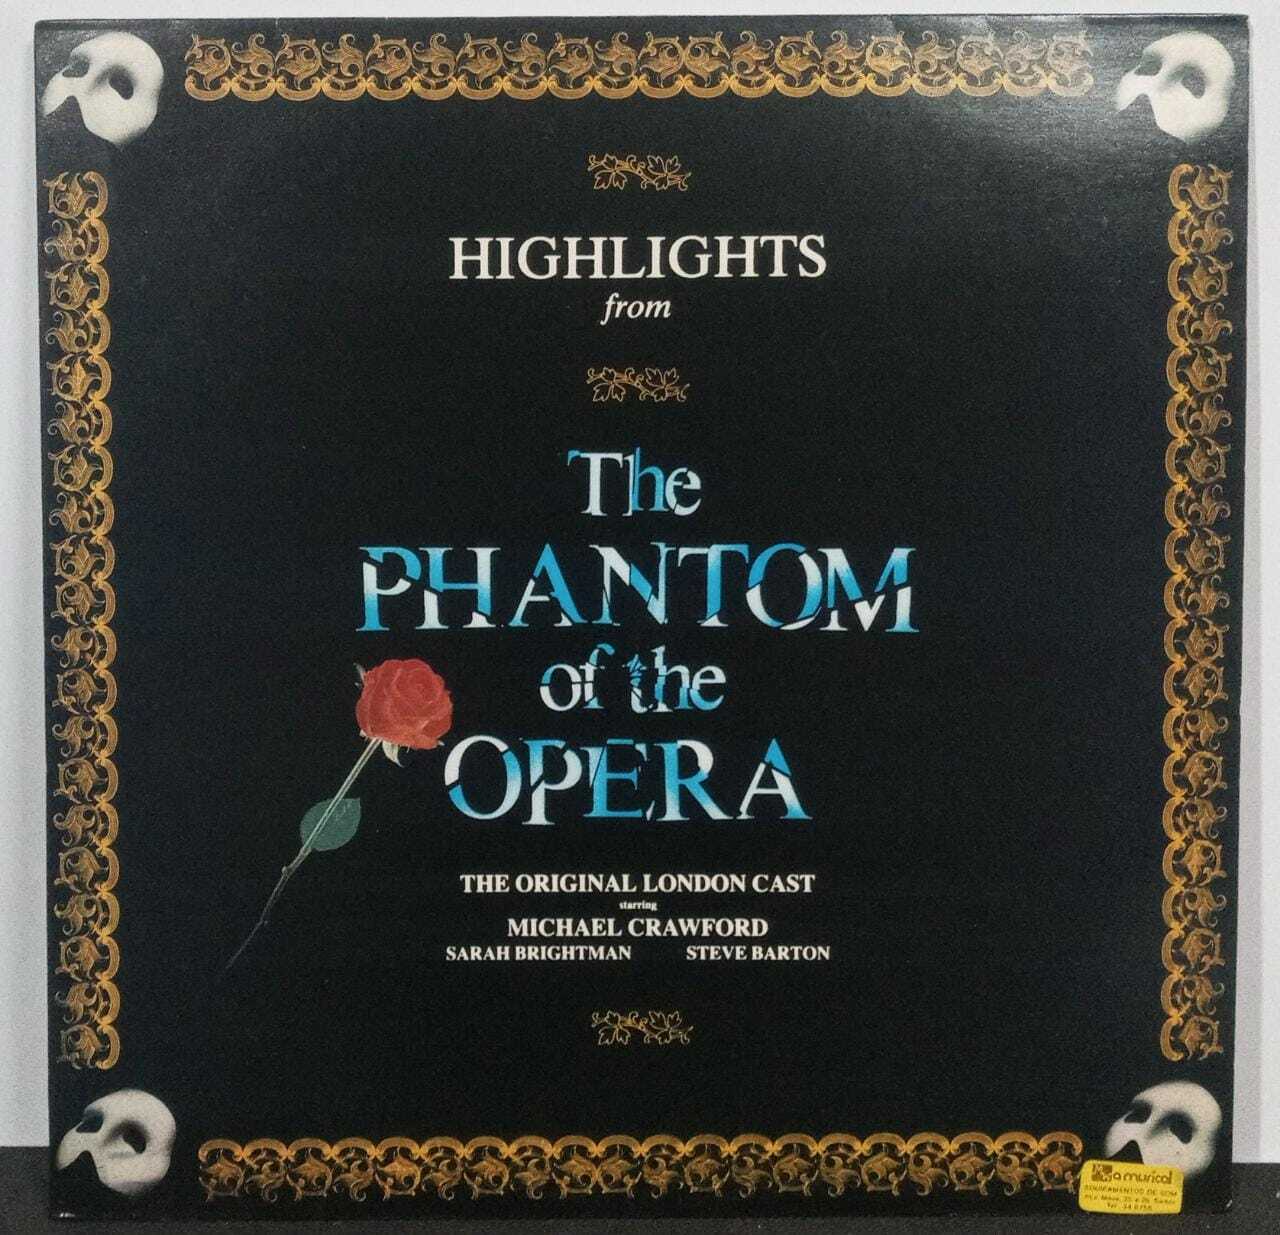 Vinil -  Michael Crawford, Sarah Brightman and Steve Barton -  The Phantom Of The Opera